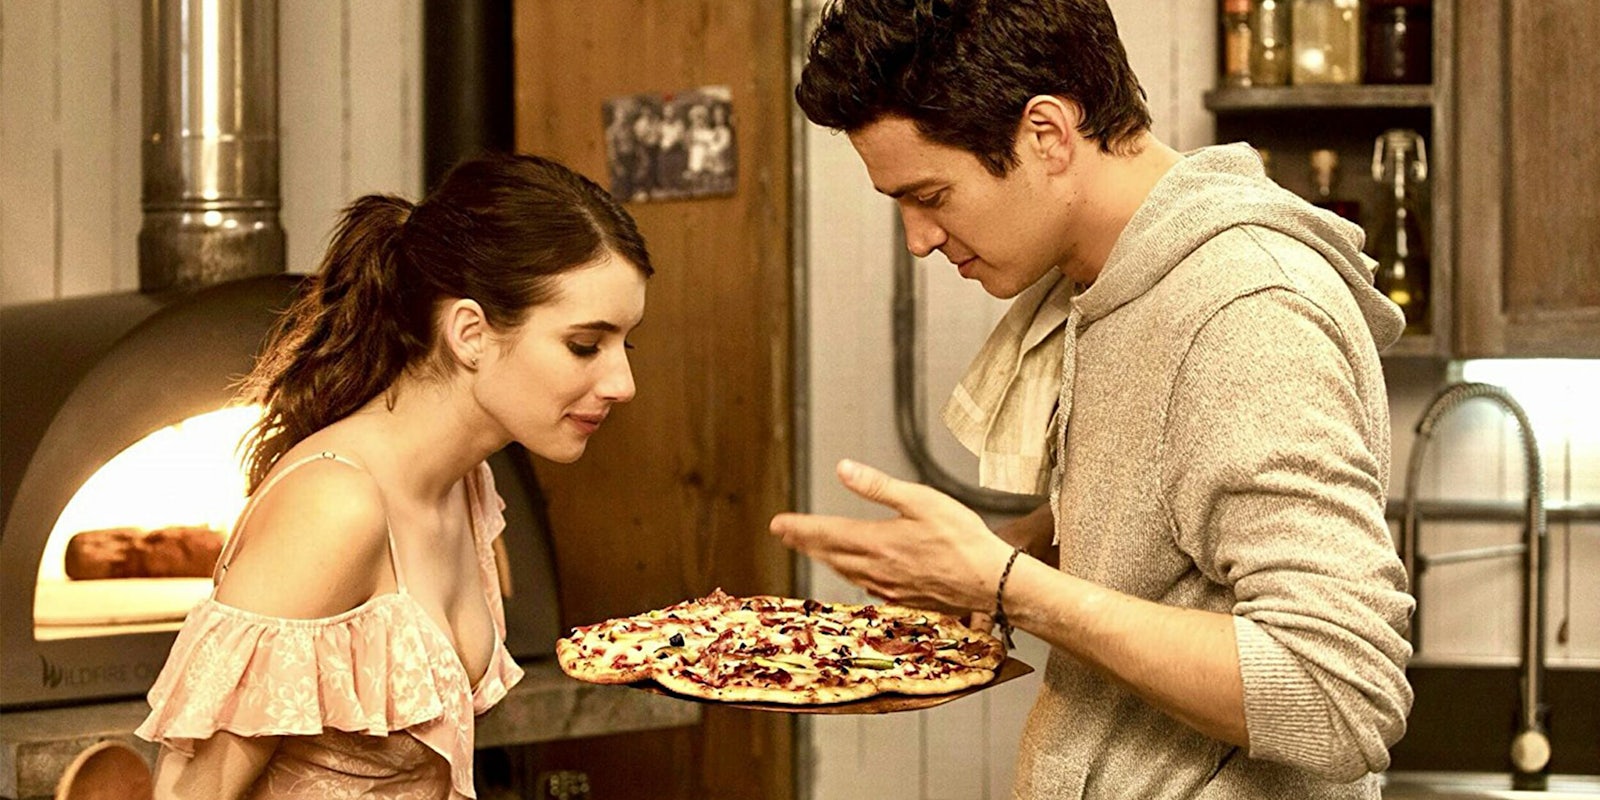 Hayden Christensen and Emma Roberts examining pizza in Little Italy